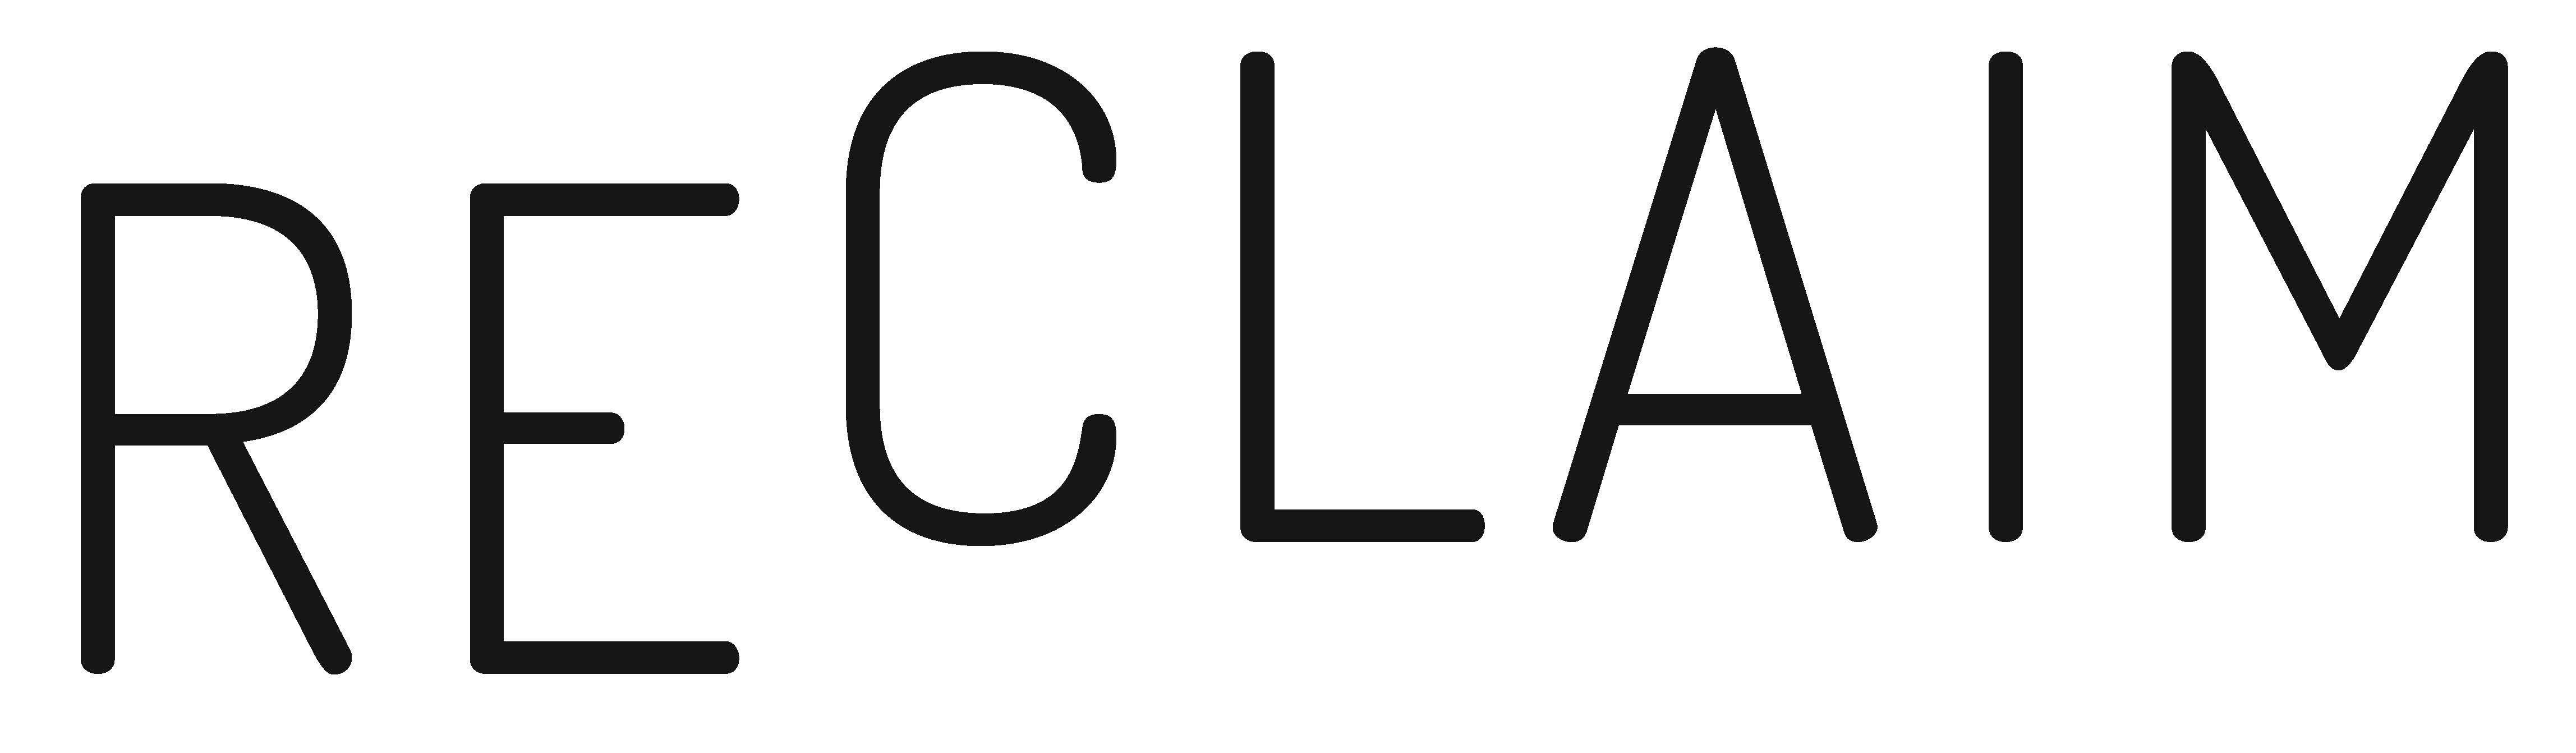 Reclaim Logo - Reclaim - Christ Community Church